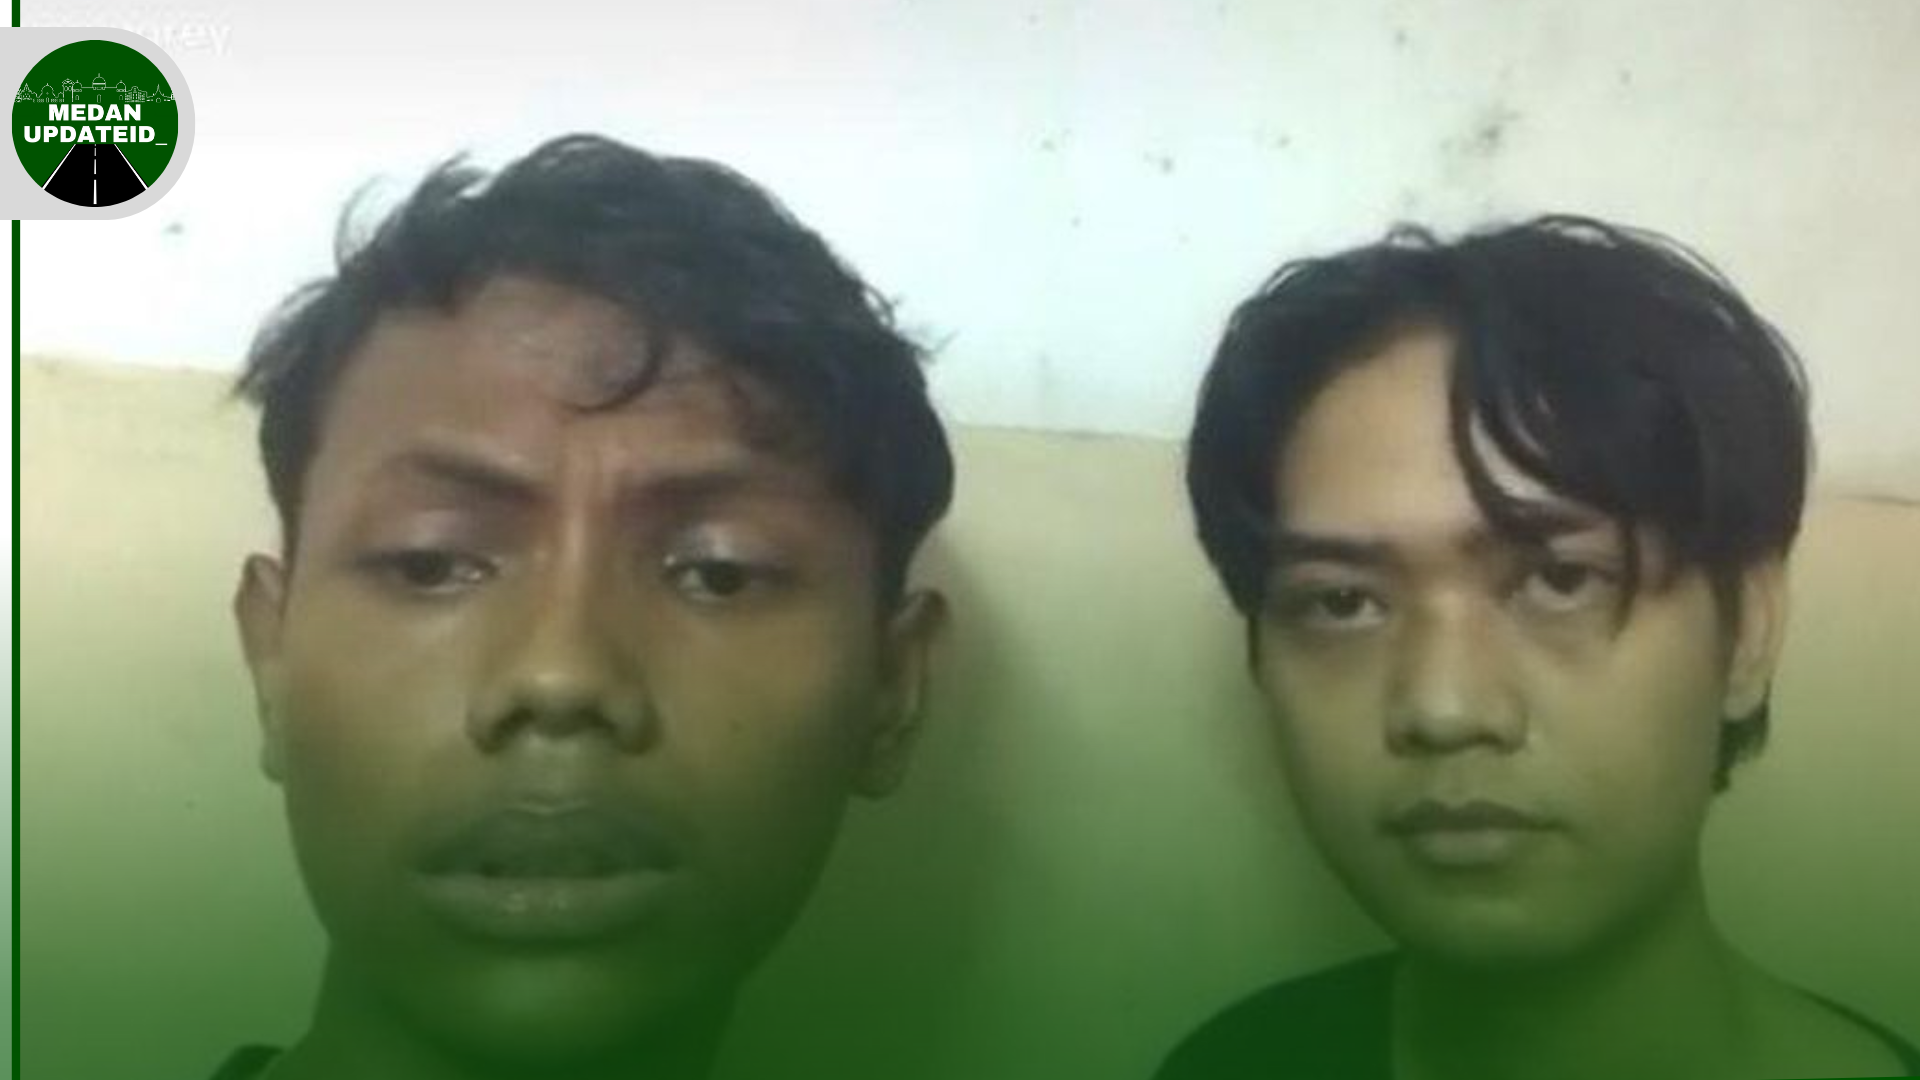 2 Warga Medan Tertipu Pekerjaan Ilegal di Kamboja, Hingga Gak Makan 4 Hari